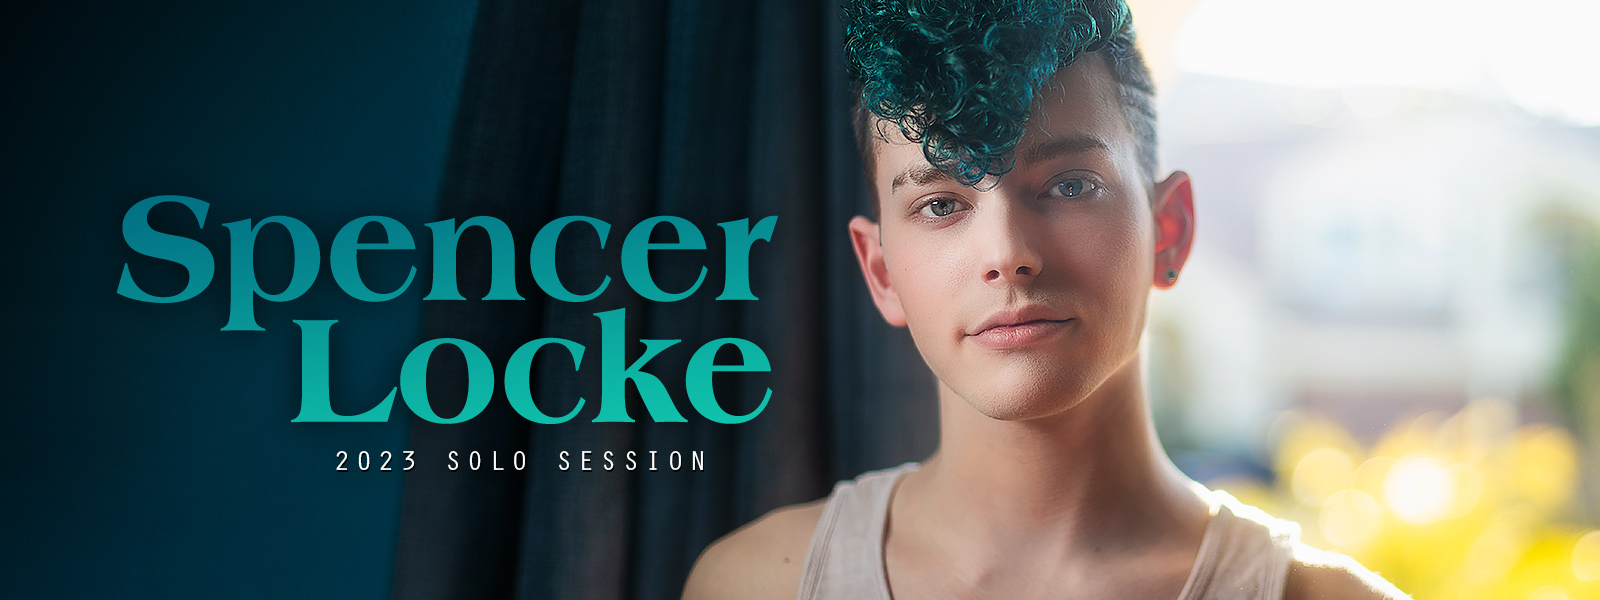 Spencer Locke 2023 Solo Session